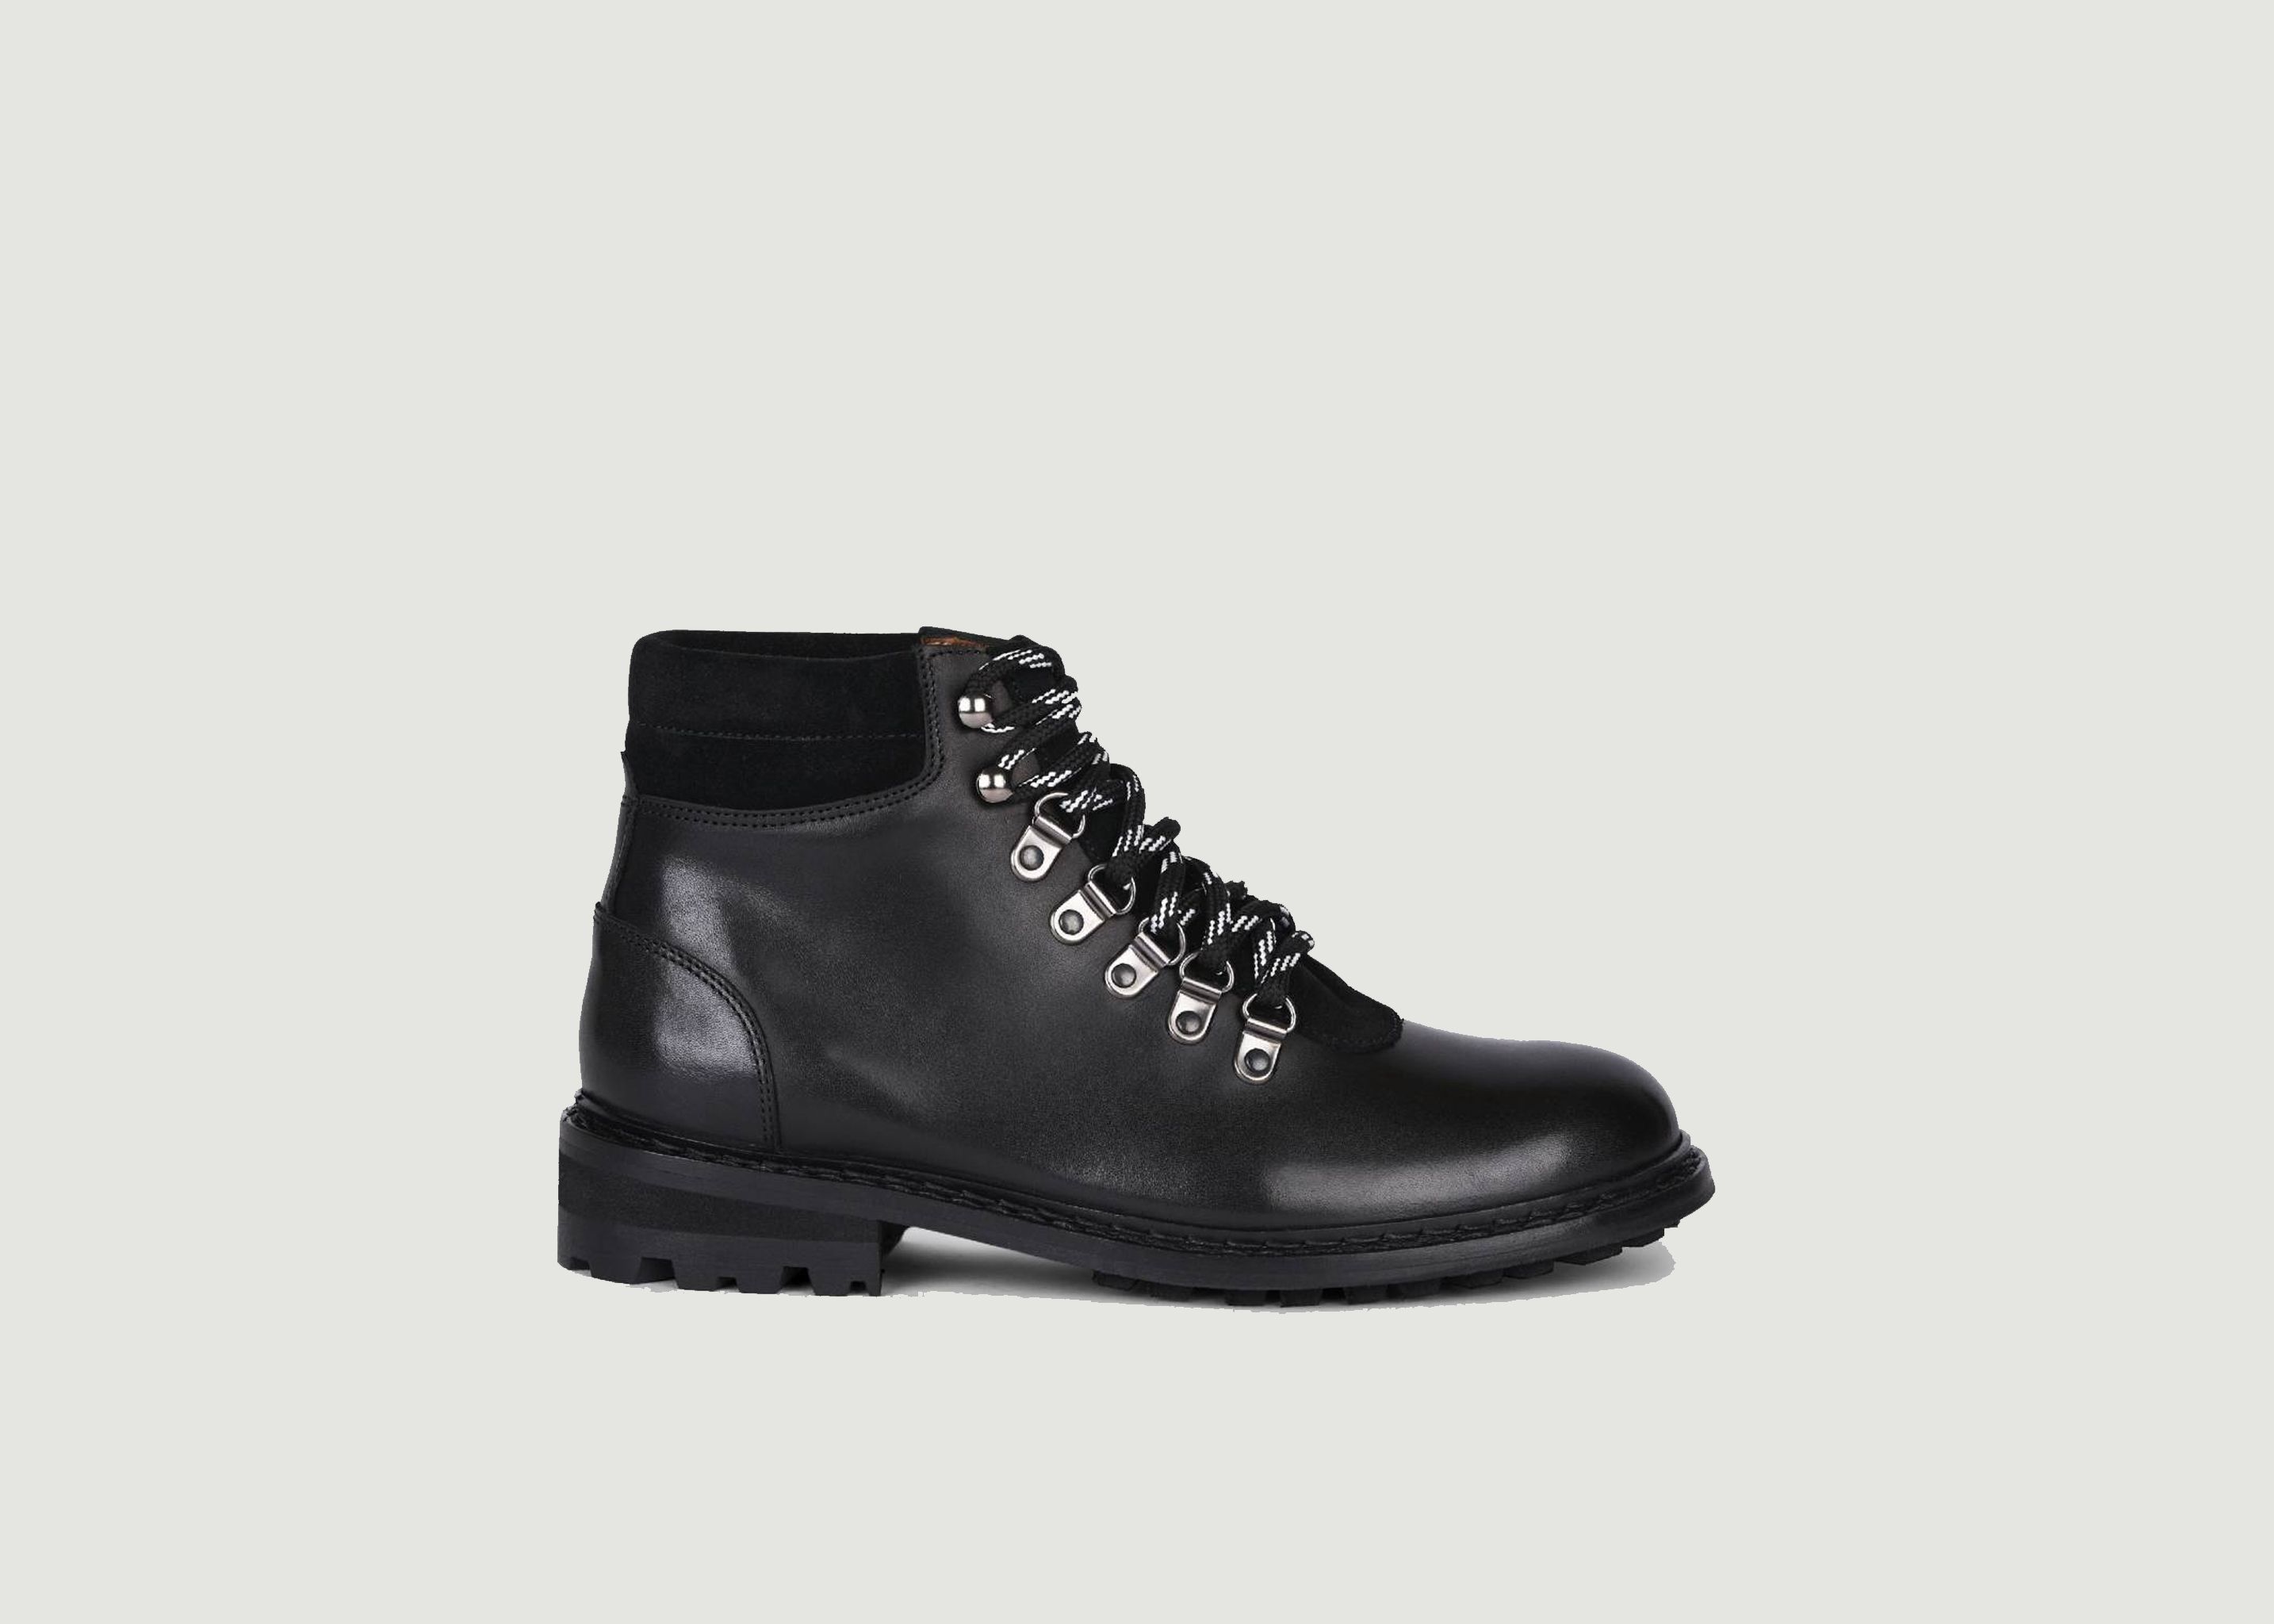 Meribel leather boots - Anthology Paris